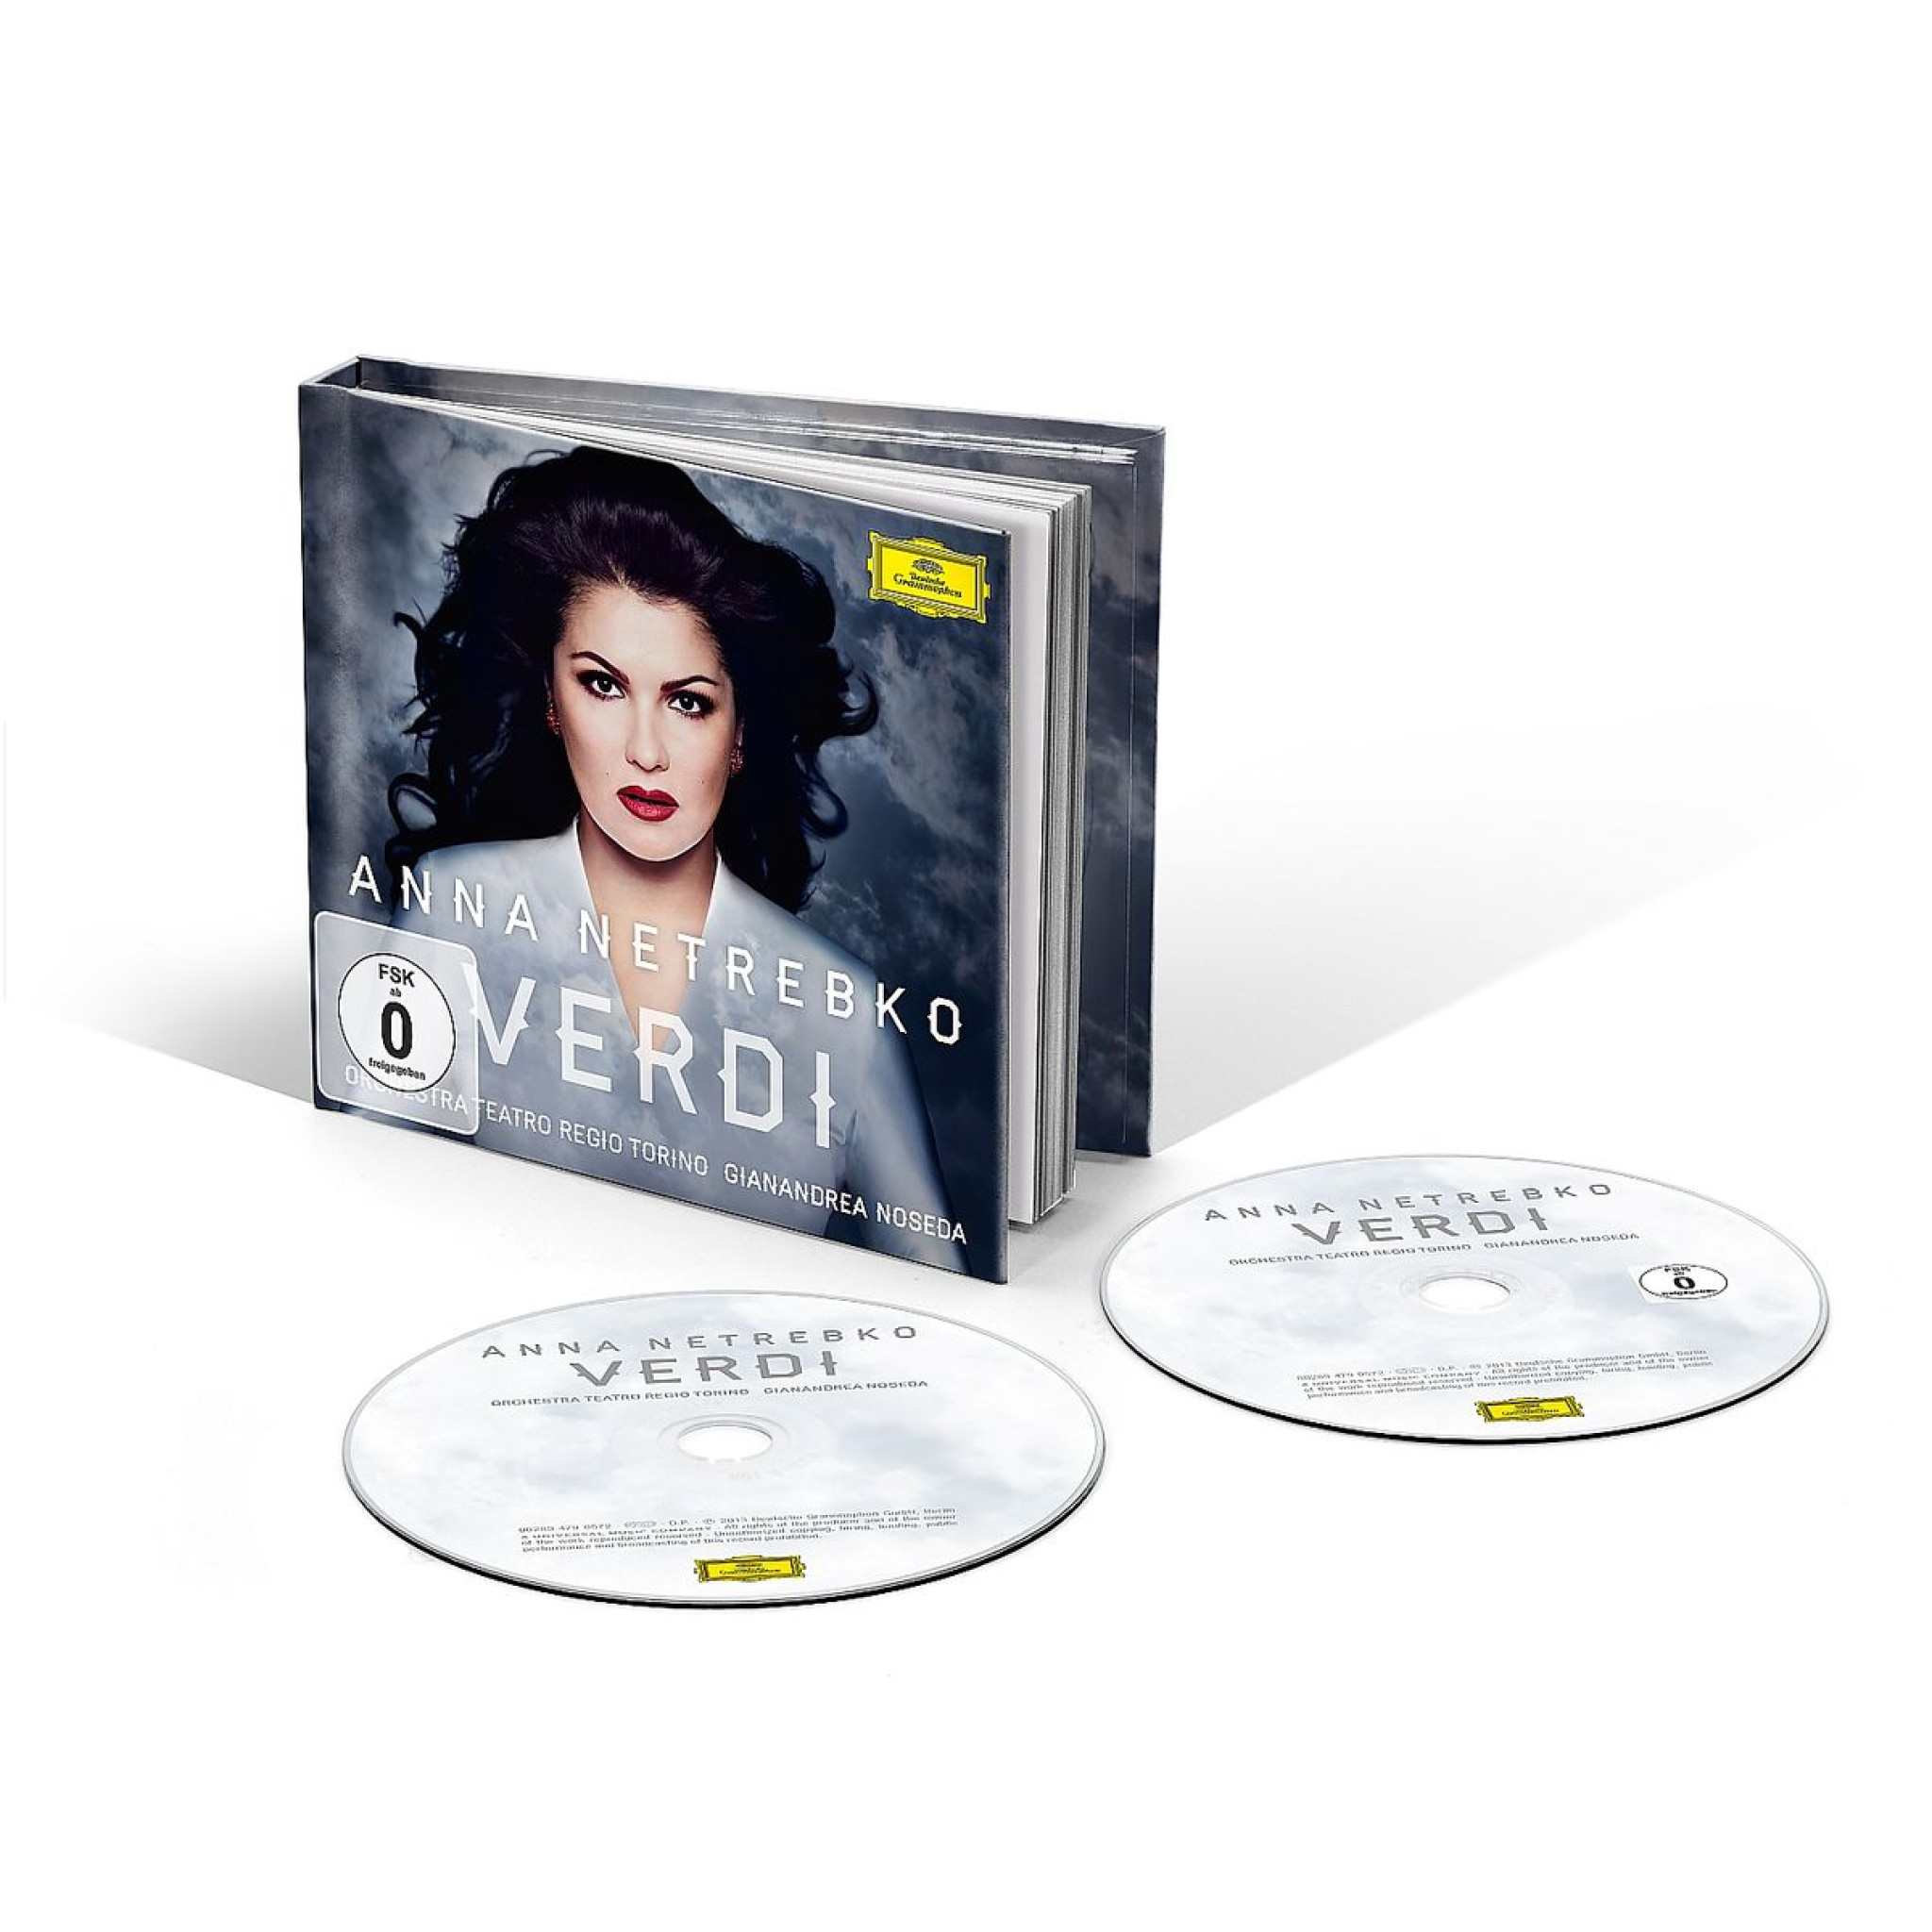 Verdi (Hardcover ltd. Deluxe Ed.)